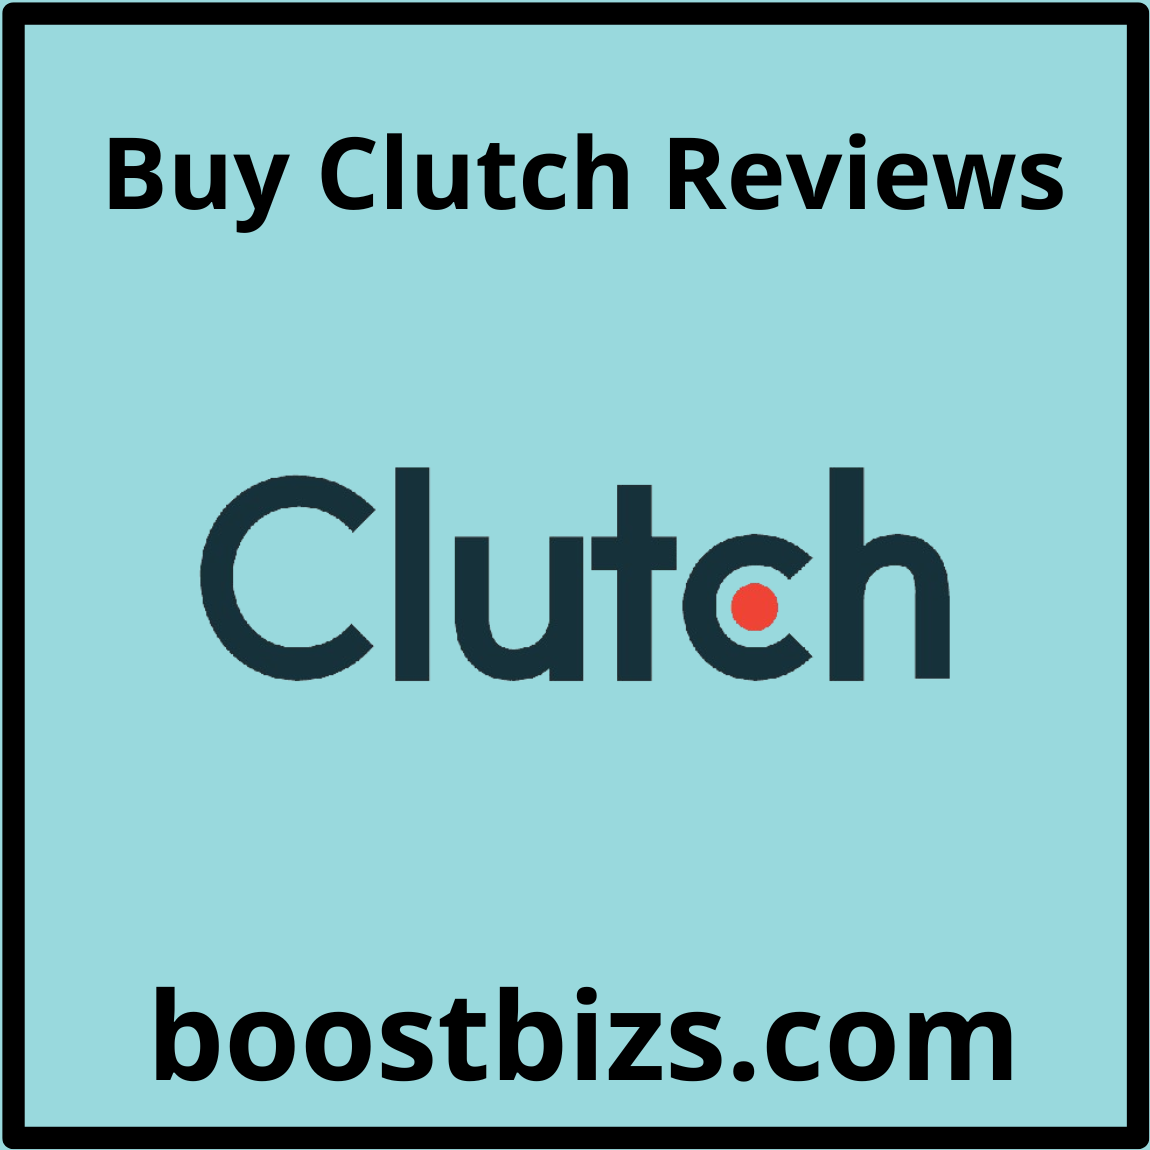 Buy Clutch Reviews - BOOSTBIZS